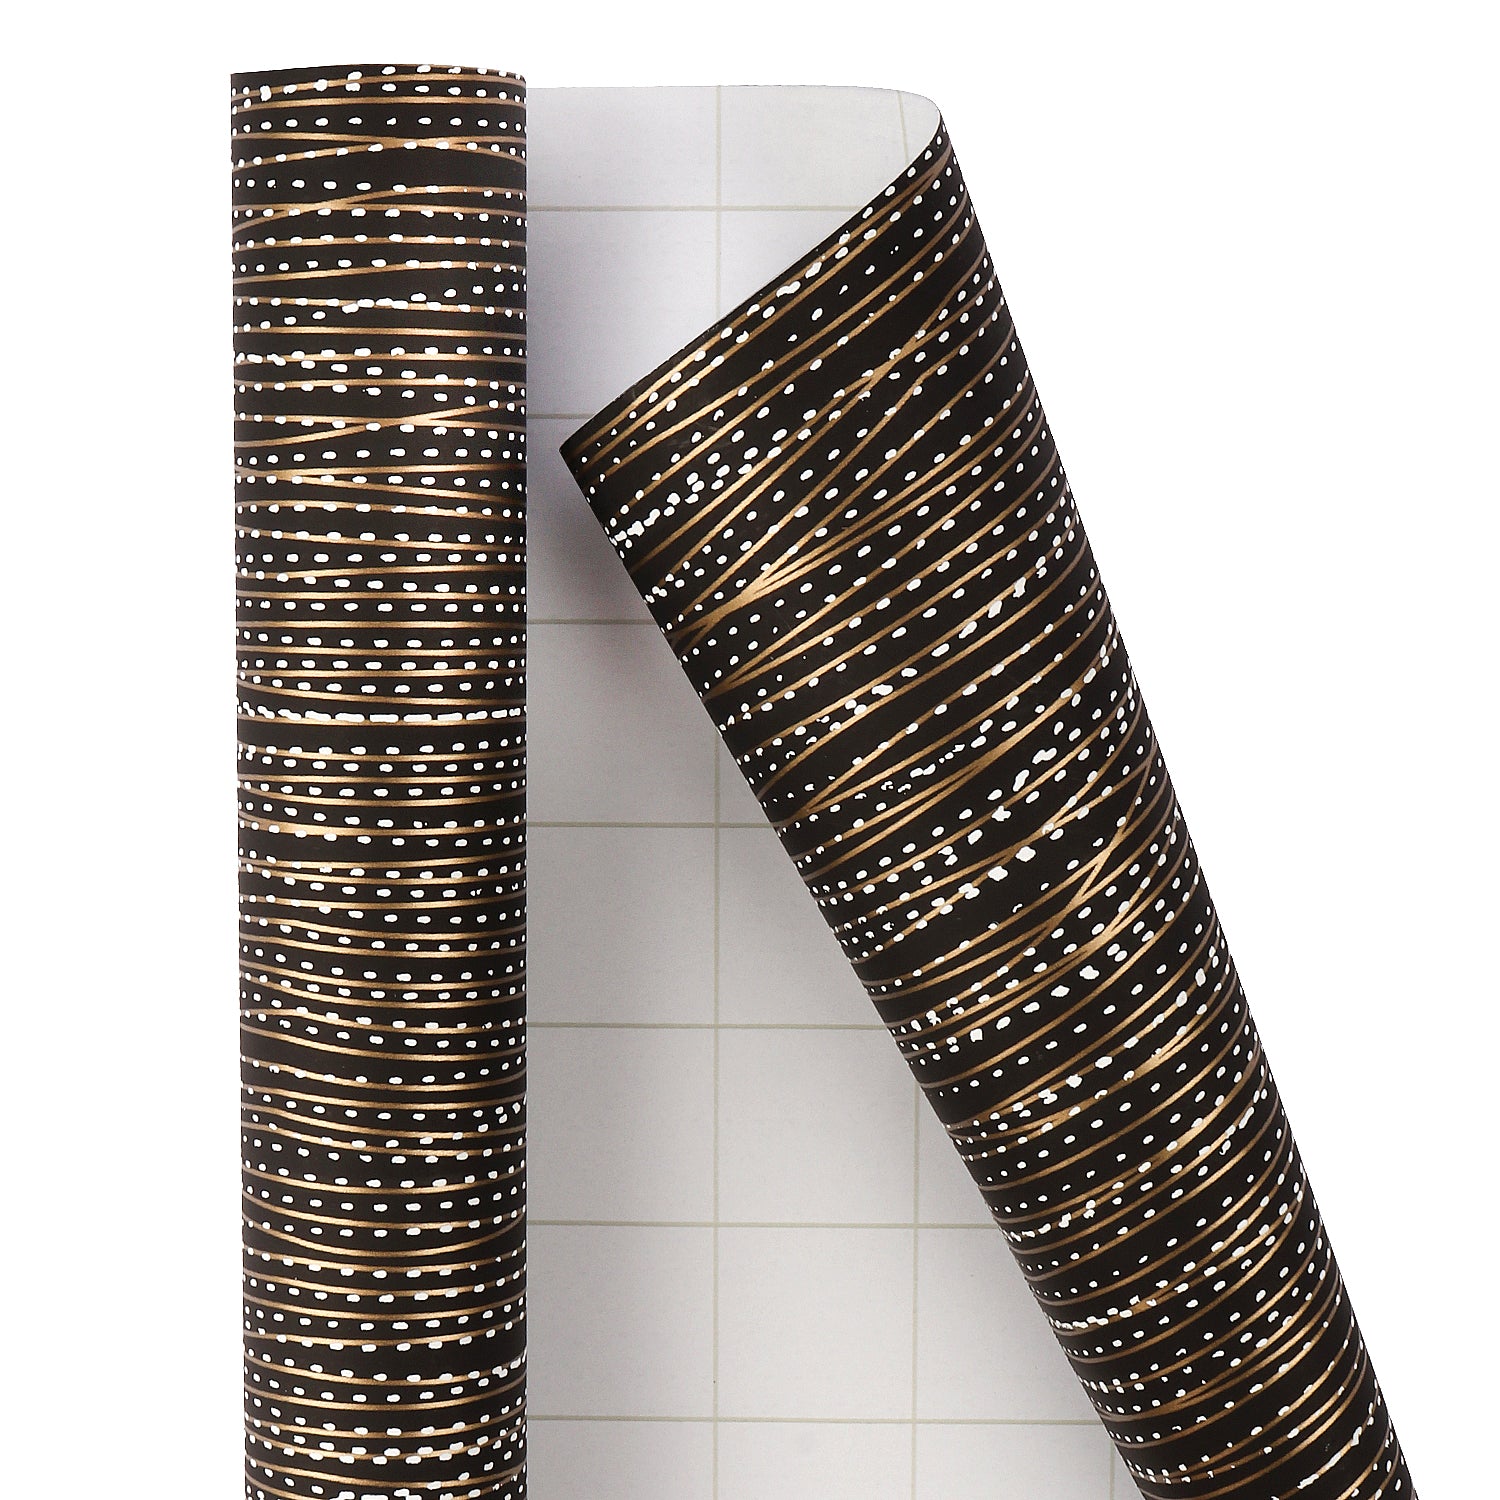 MAYPLUSS Wrapping Paper Roll - Mini Roll - 17 inch x 120 inch per Roll - White & Gold Foil Design (42.3 sq.ft.ttl)